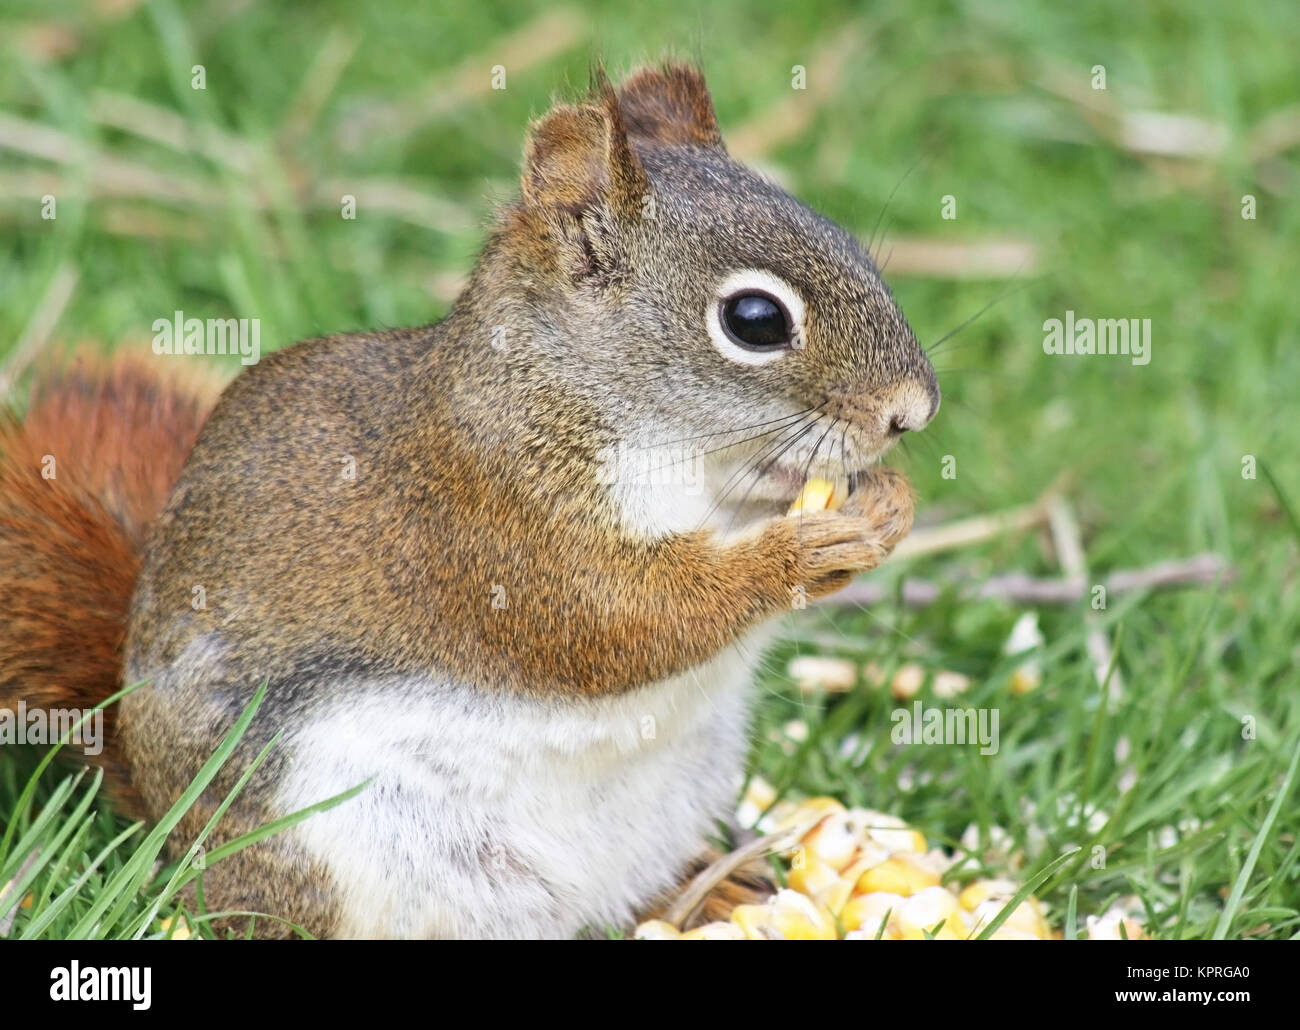 Ardilla roja diminuta comer de un pequeño montón de maíz Foto de stock